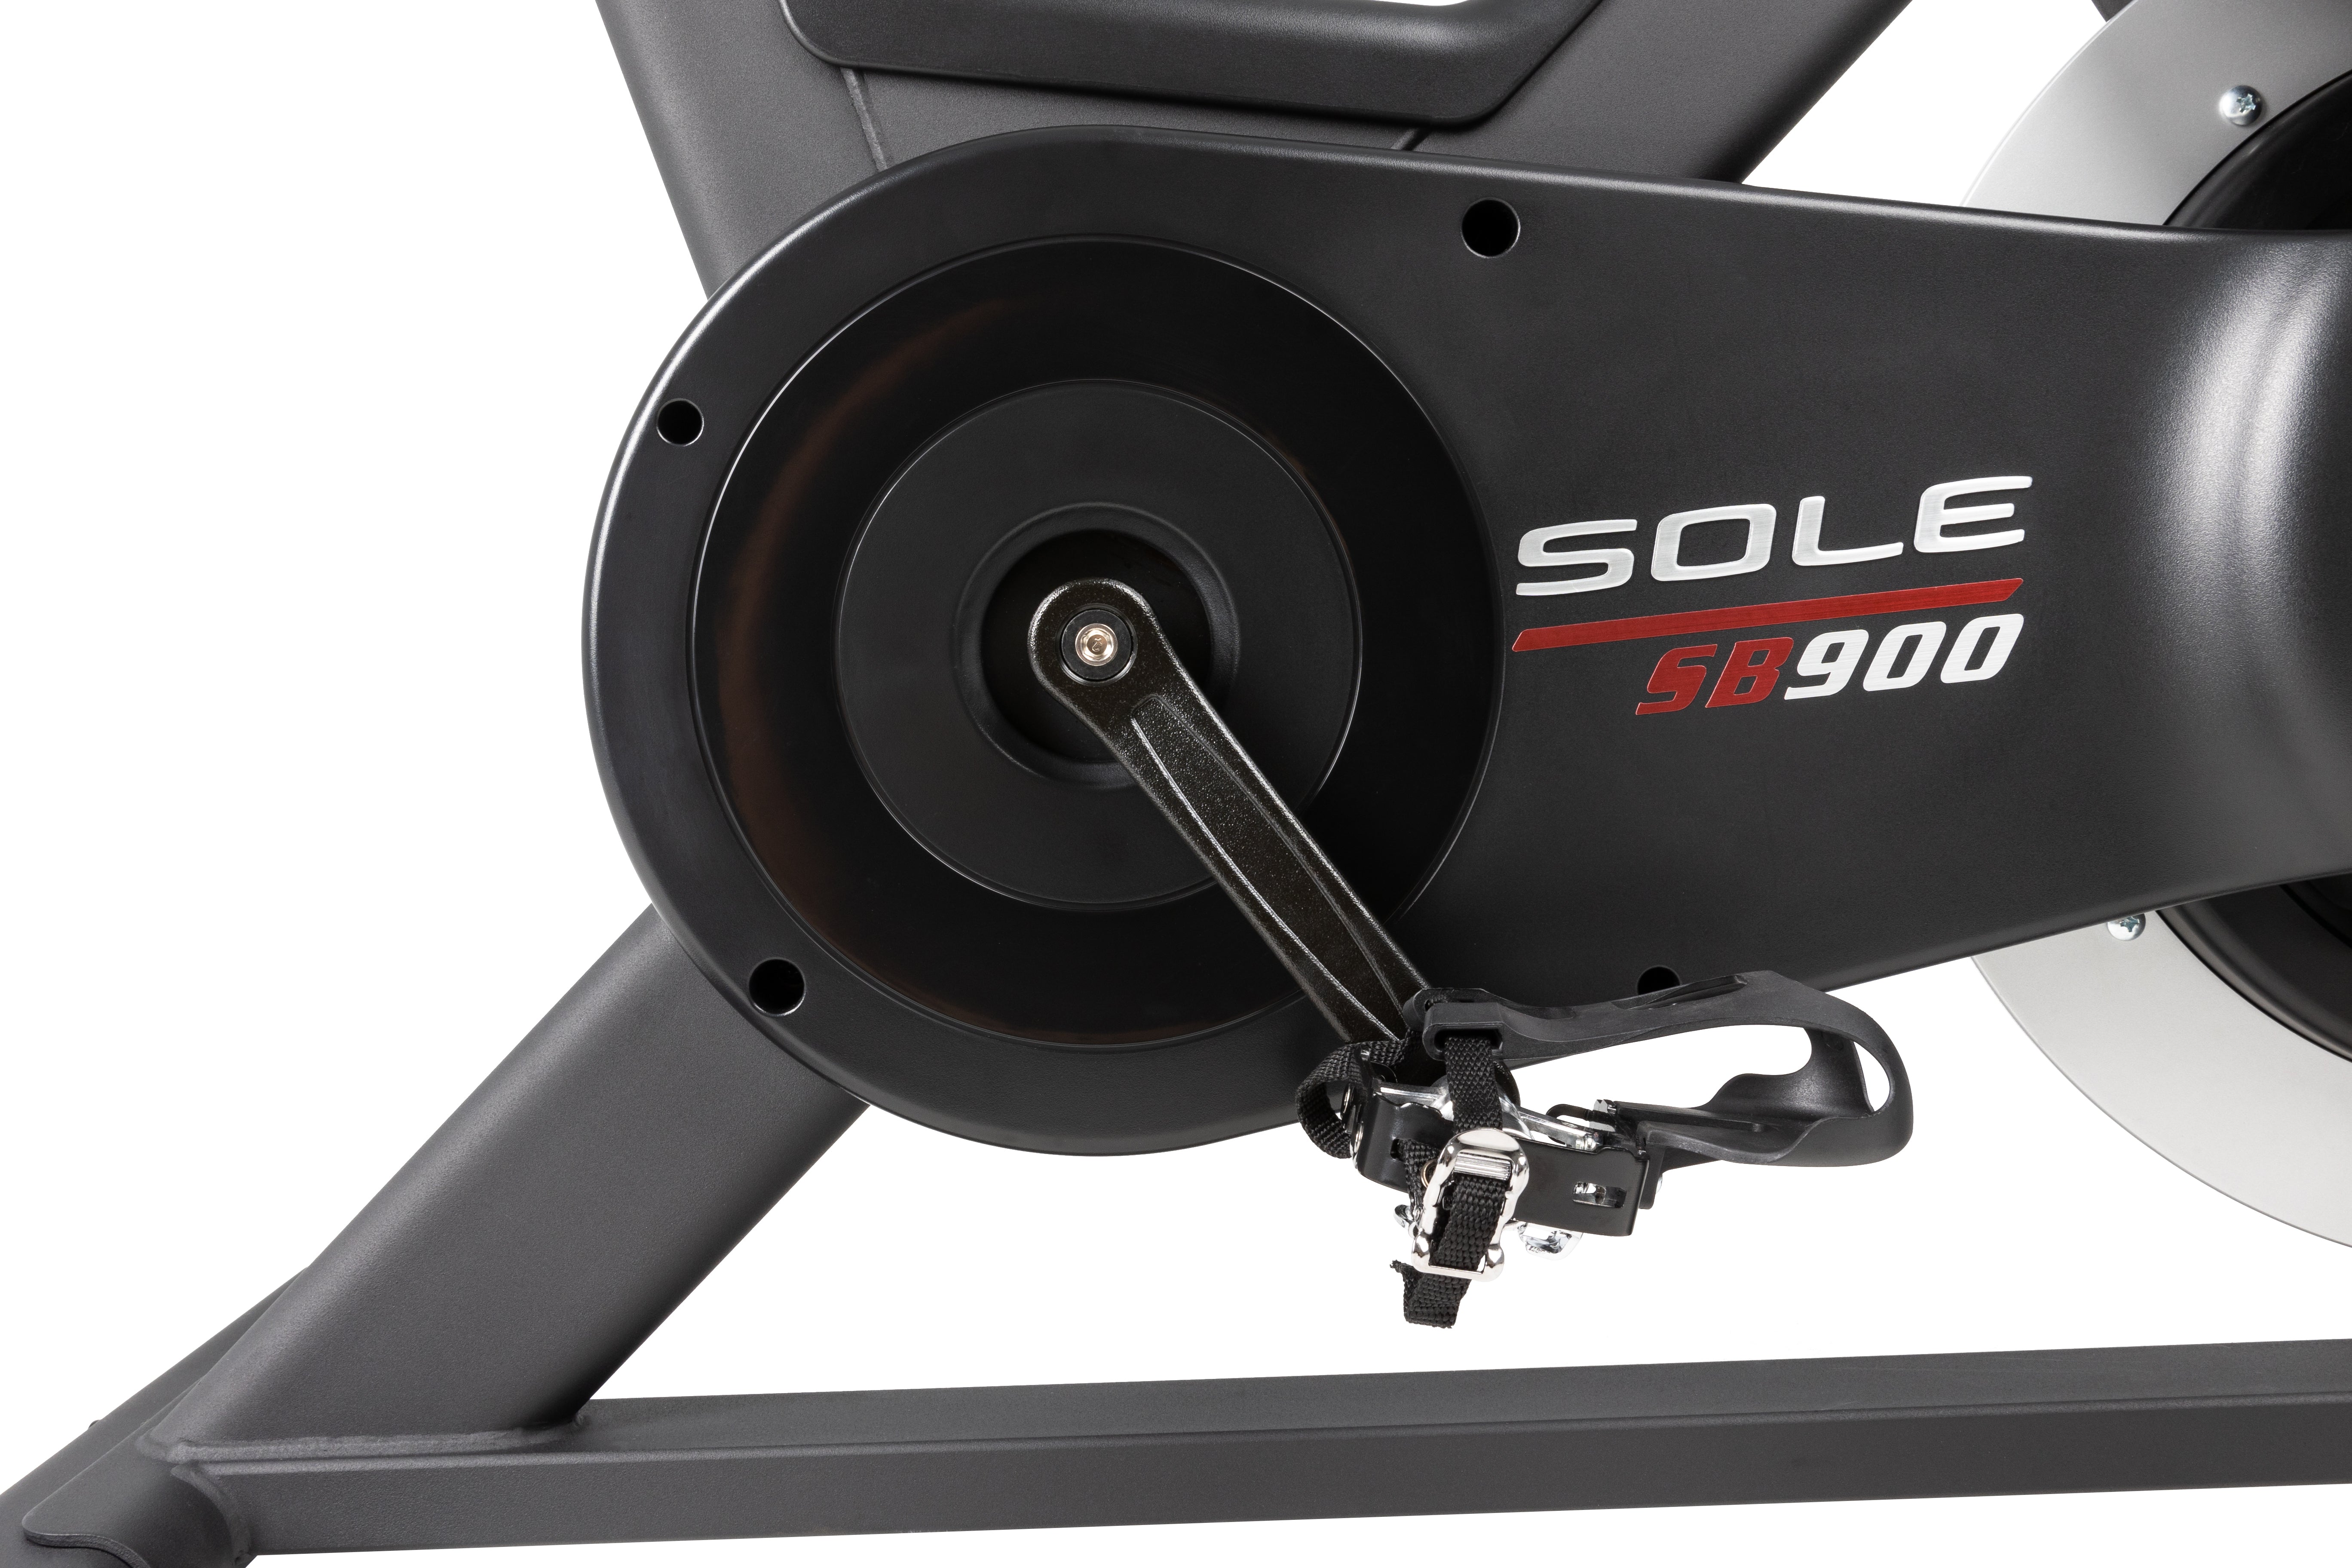 SOLE SB900 Exercise Bike